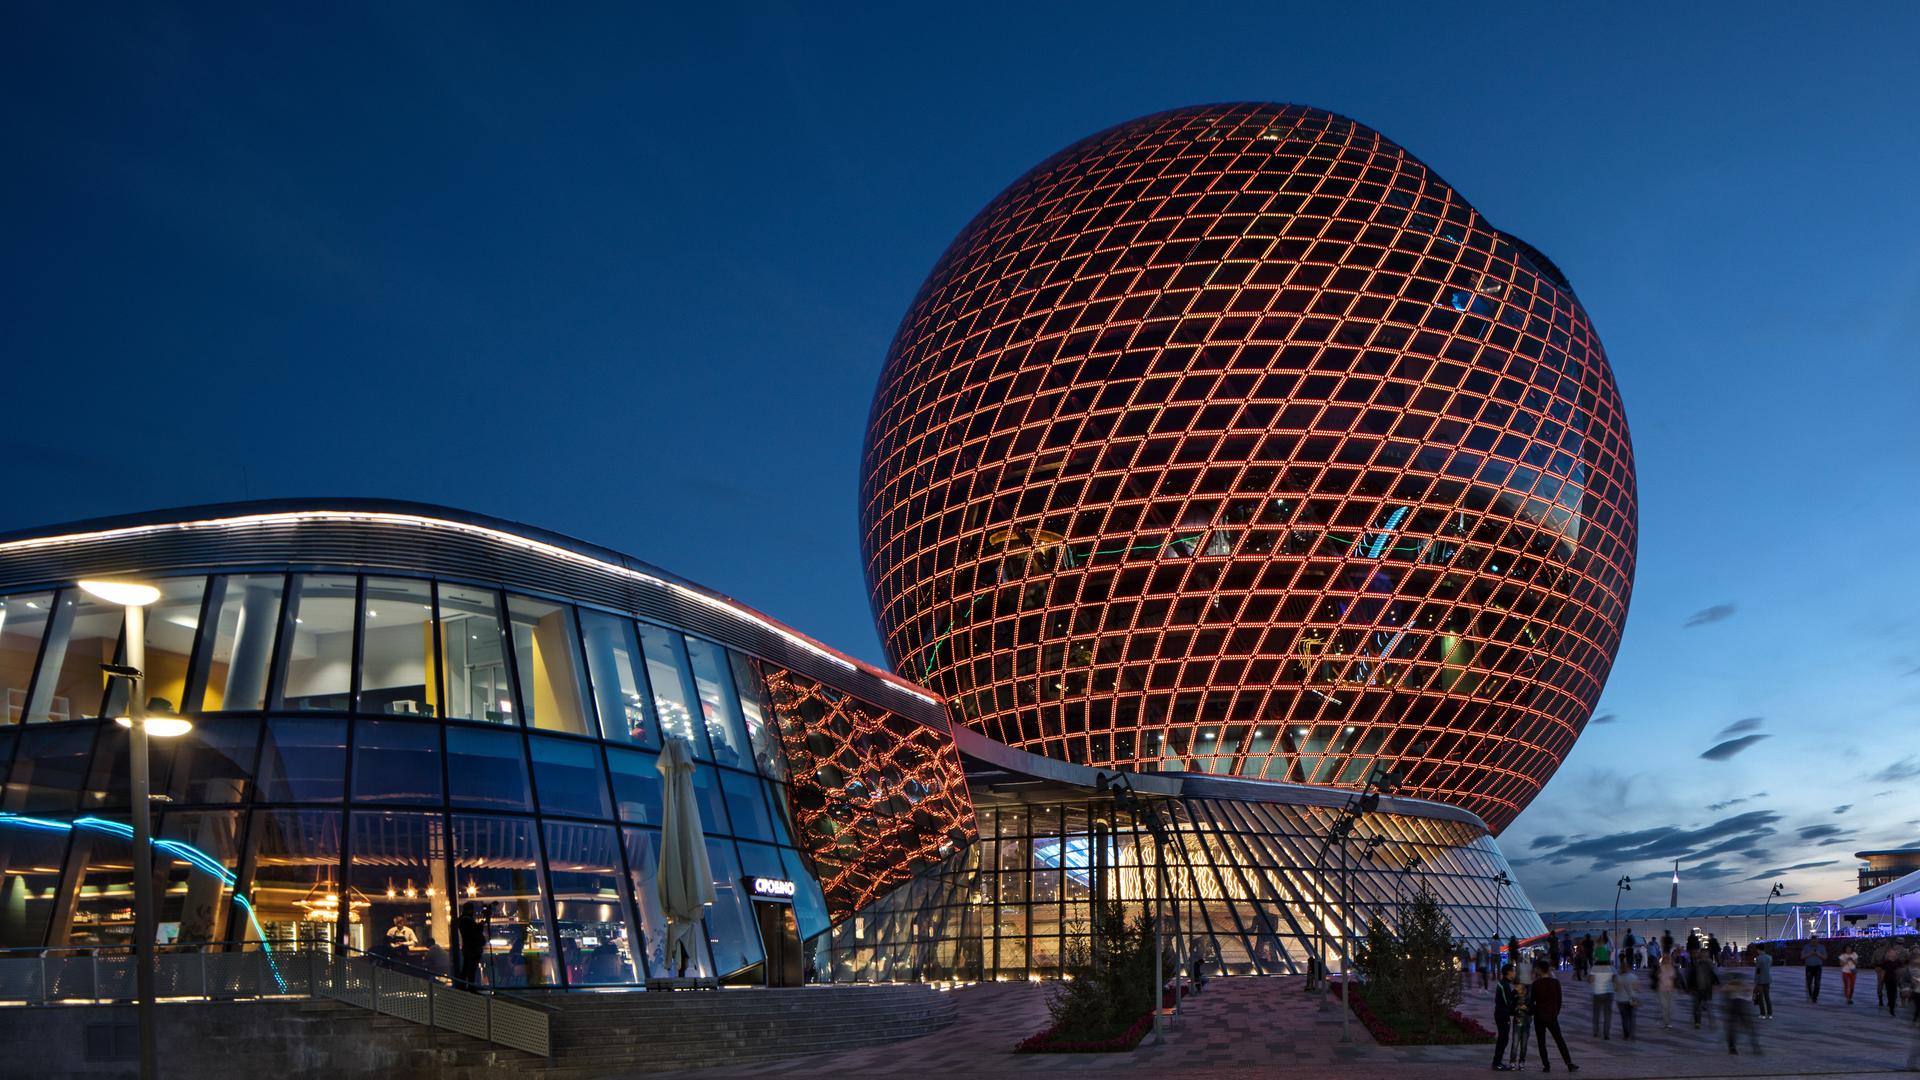 Neumann&Müller Event Technology LLC - "The Sphere" at Expo 2017, Kazakhstan